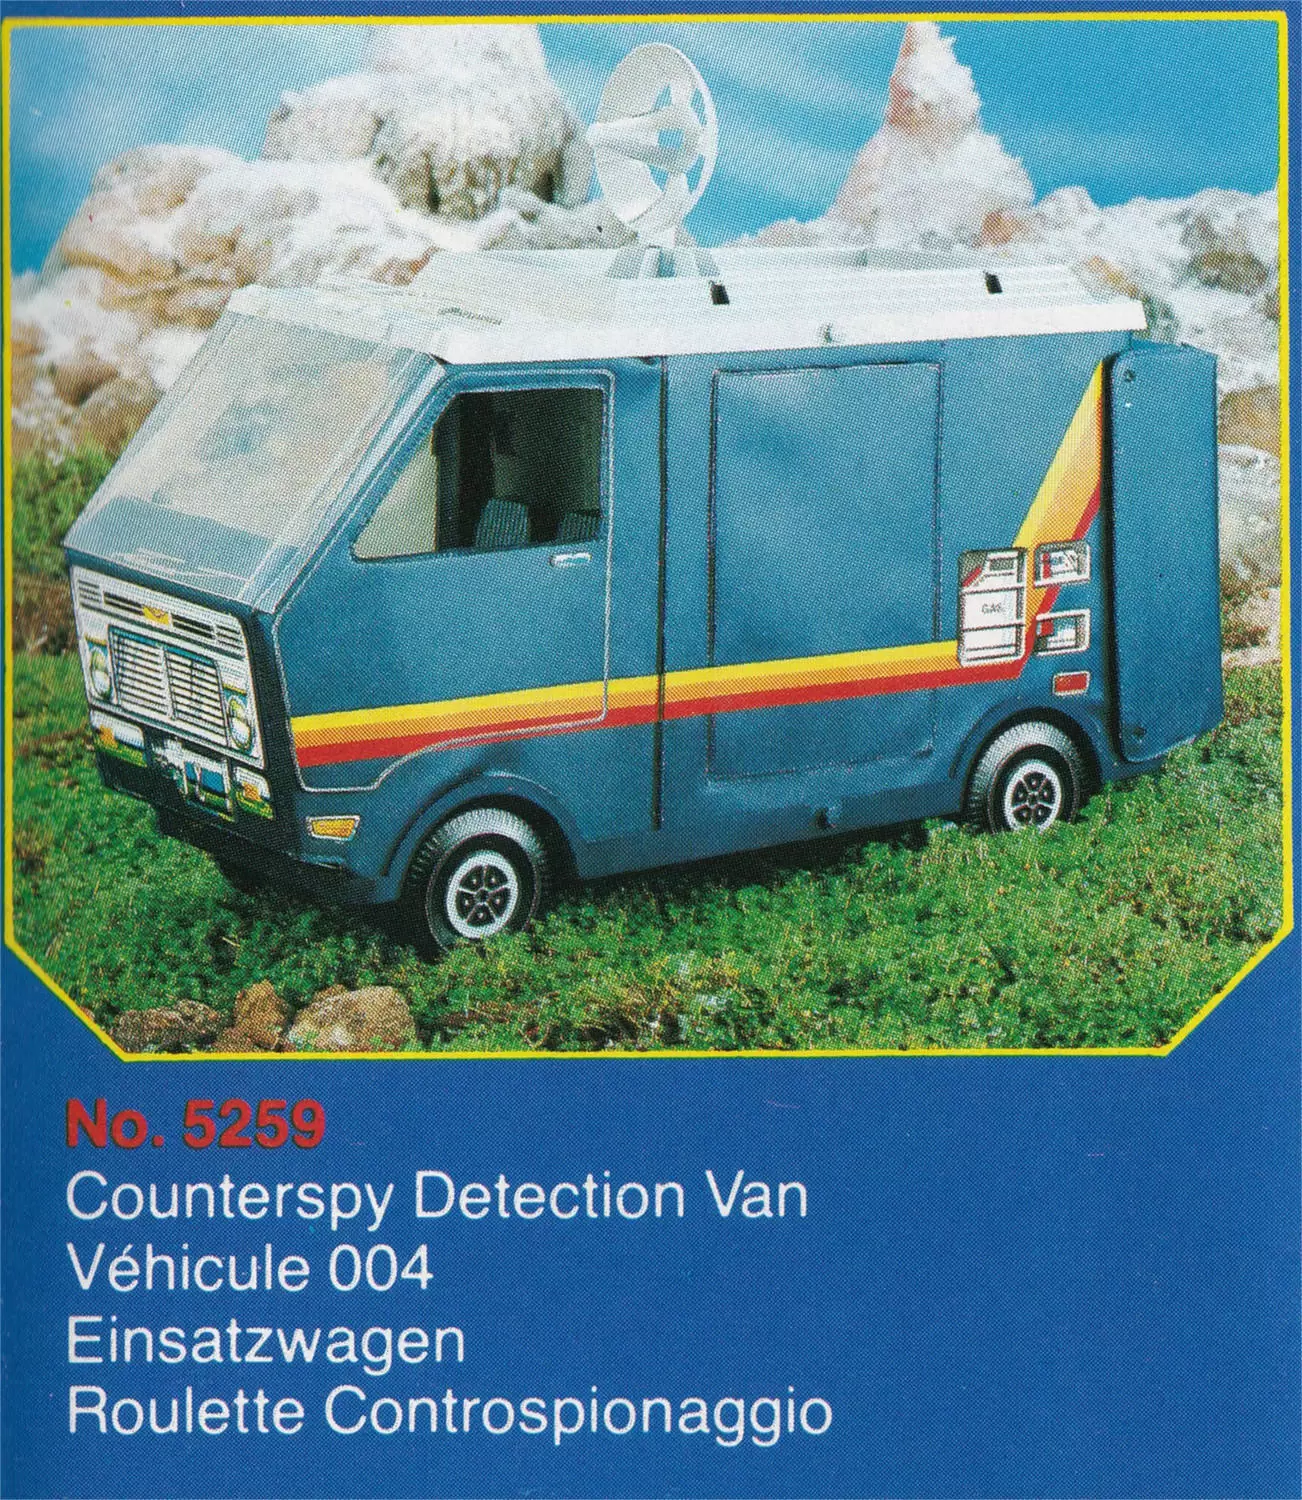 Big Jim Vehicles & accessories - Counterspy Detection Van